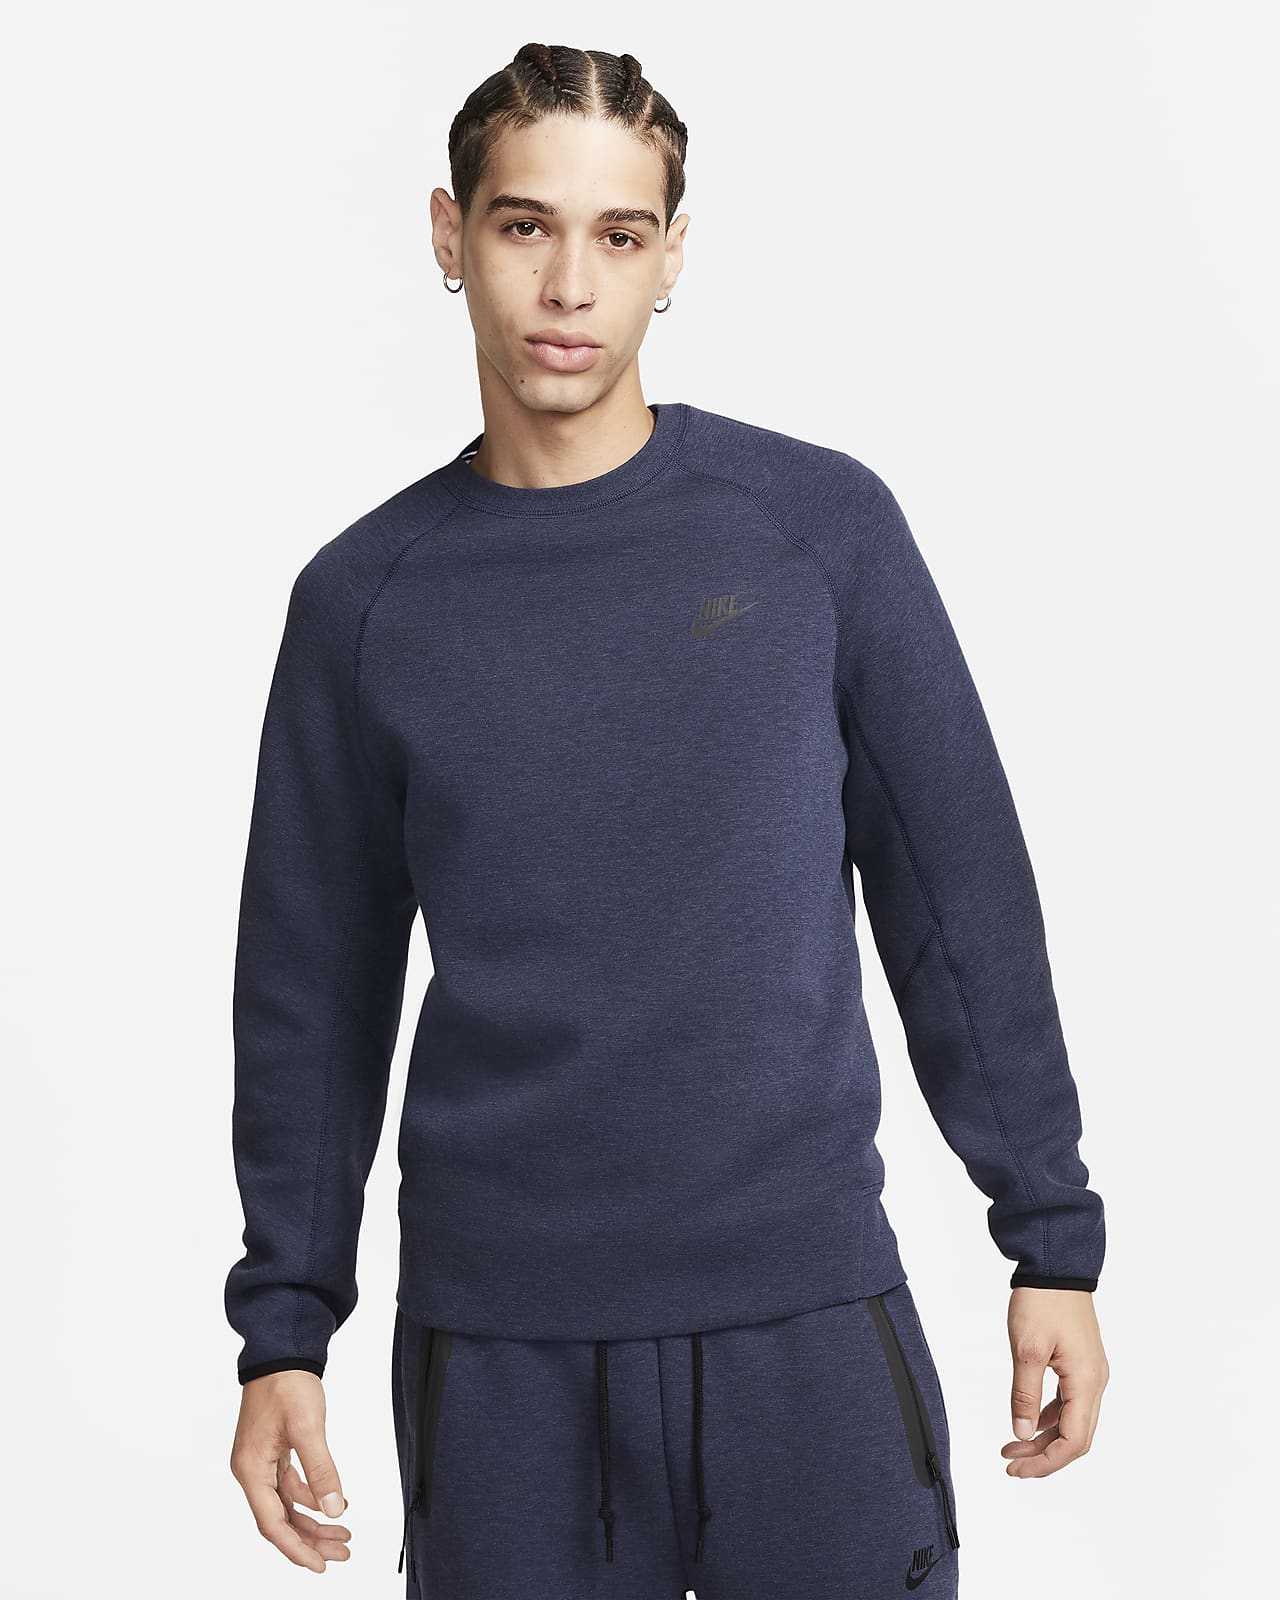 Pantalon pour Homme Nike Sportswear Gris froid – Original Clothing Maroc